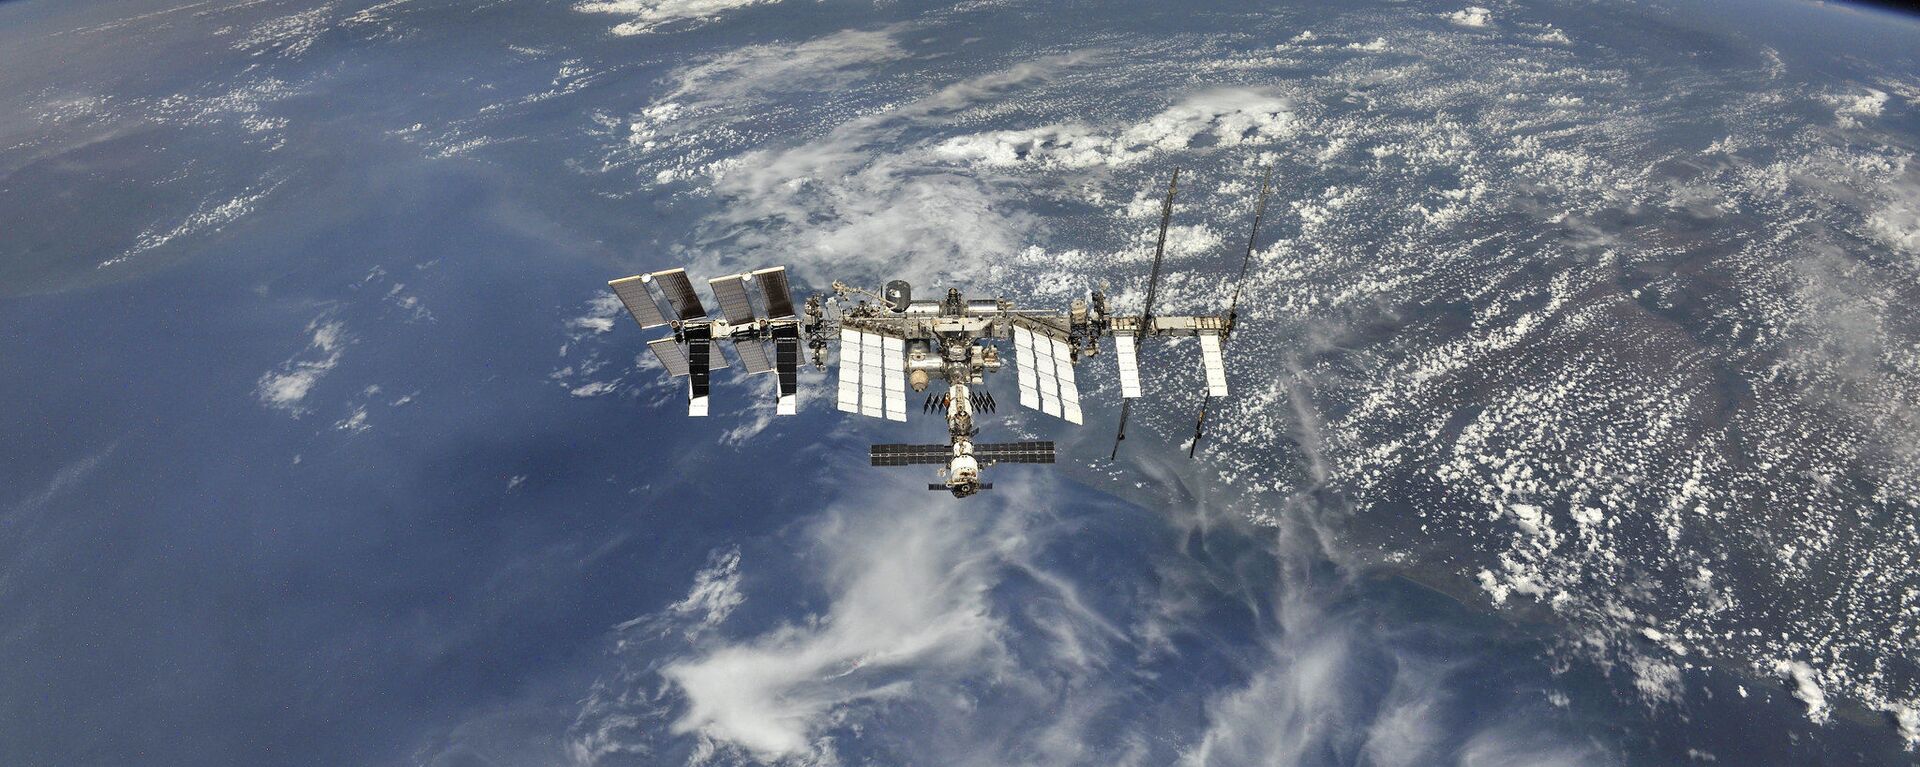 Estación Espacial Internacional (EEI) - Sputnik Mundo, 1920, 22.12.2021